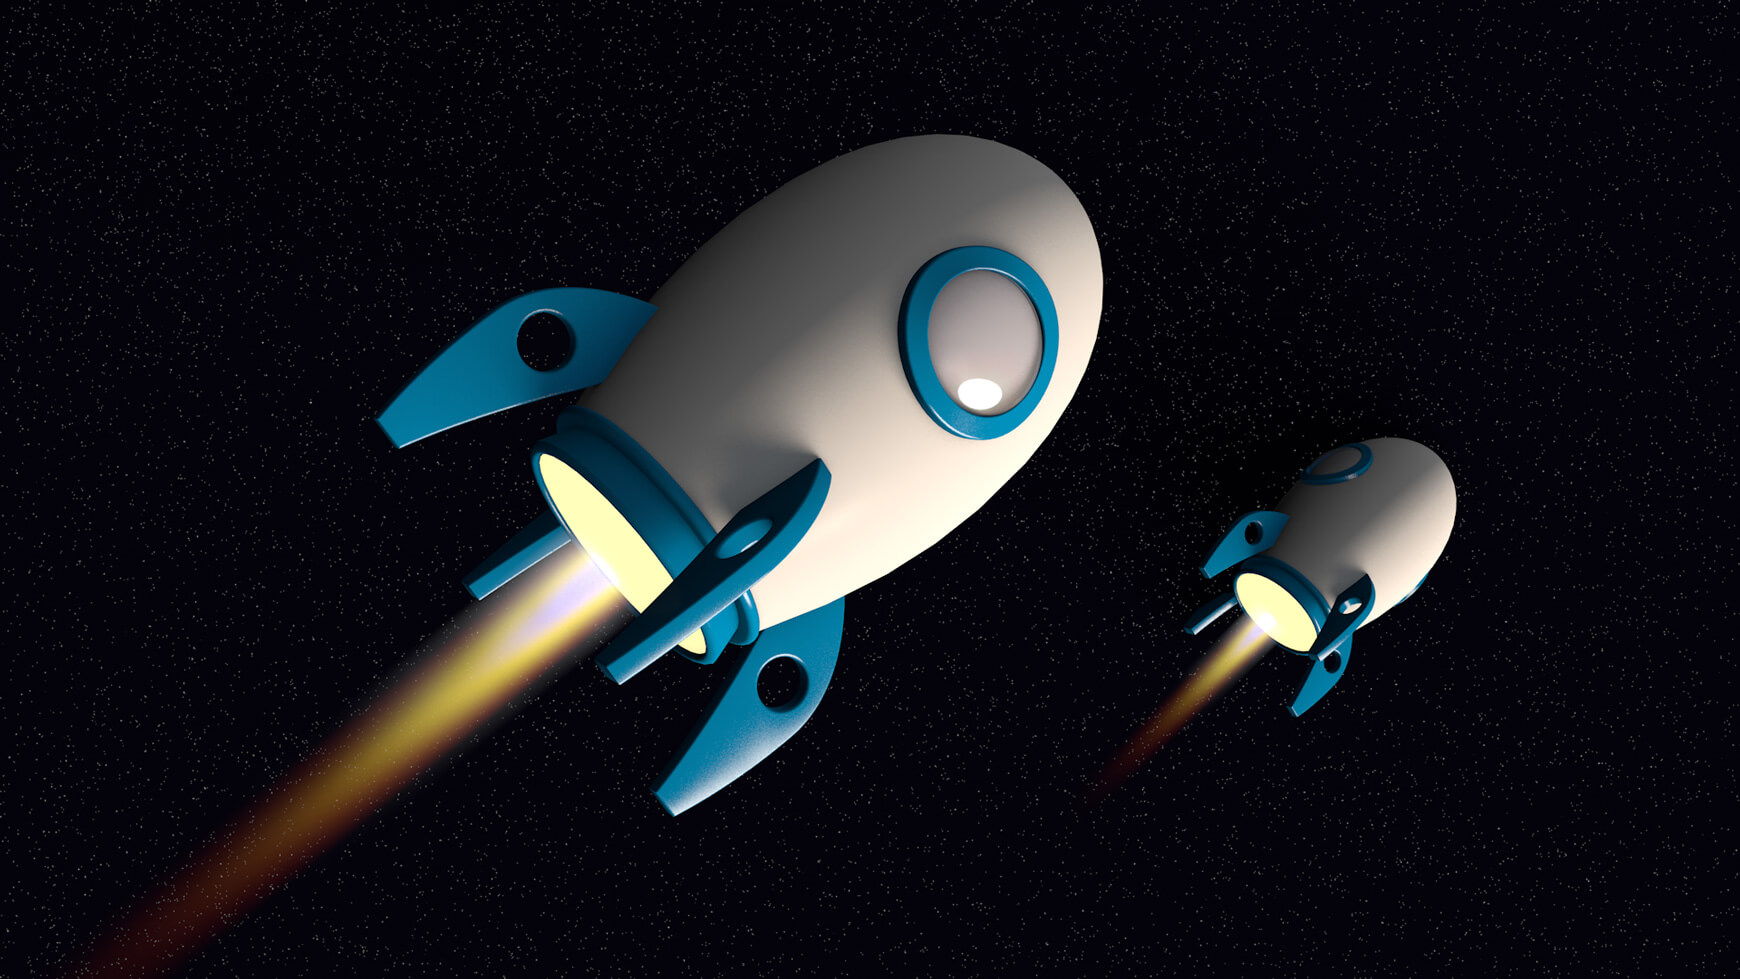 Free Cinema 4D 3D Model: Cartoon Style Rocket Ship - The Pixel Lab